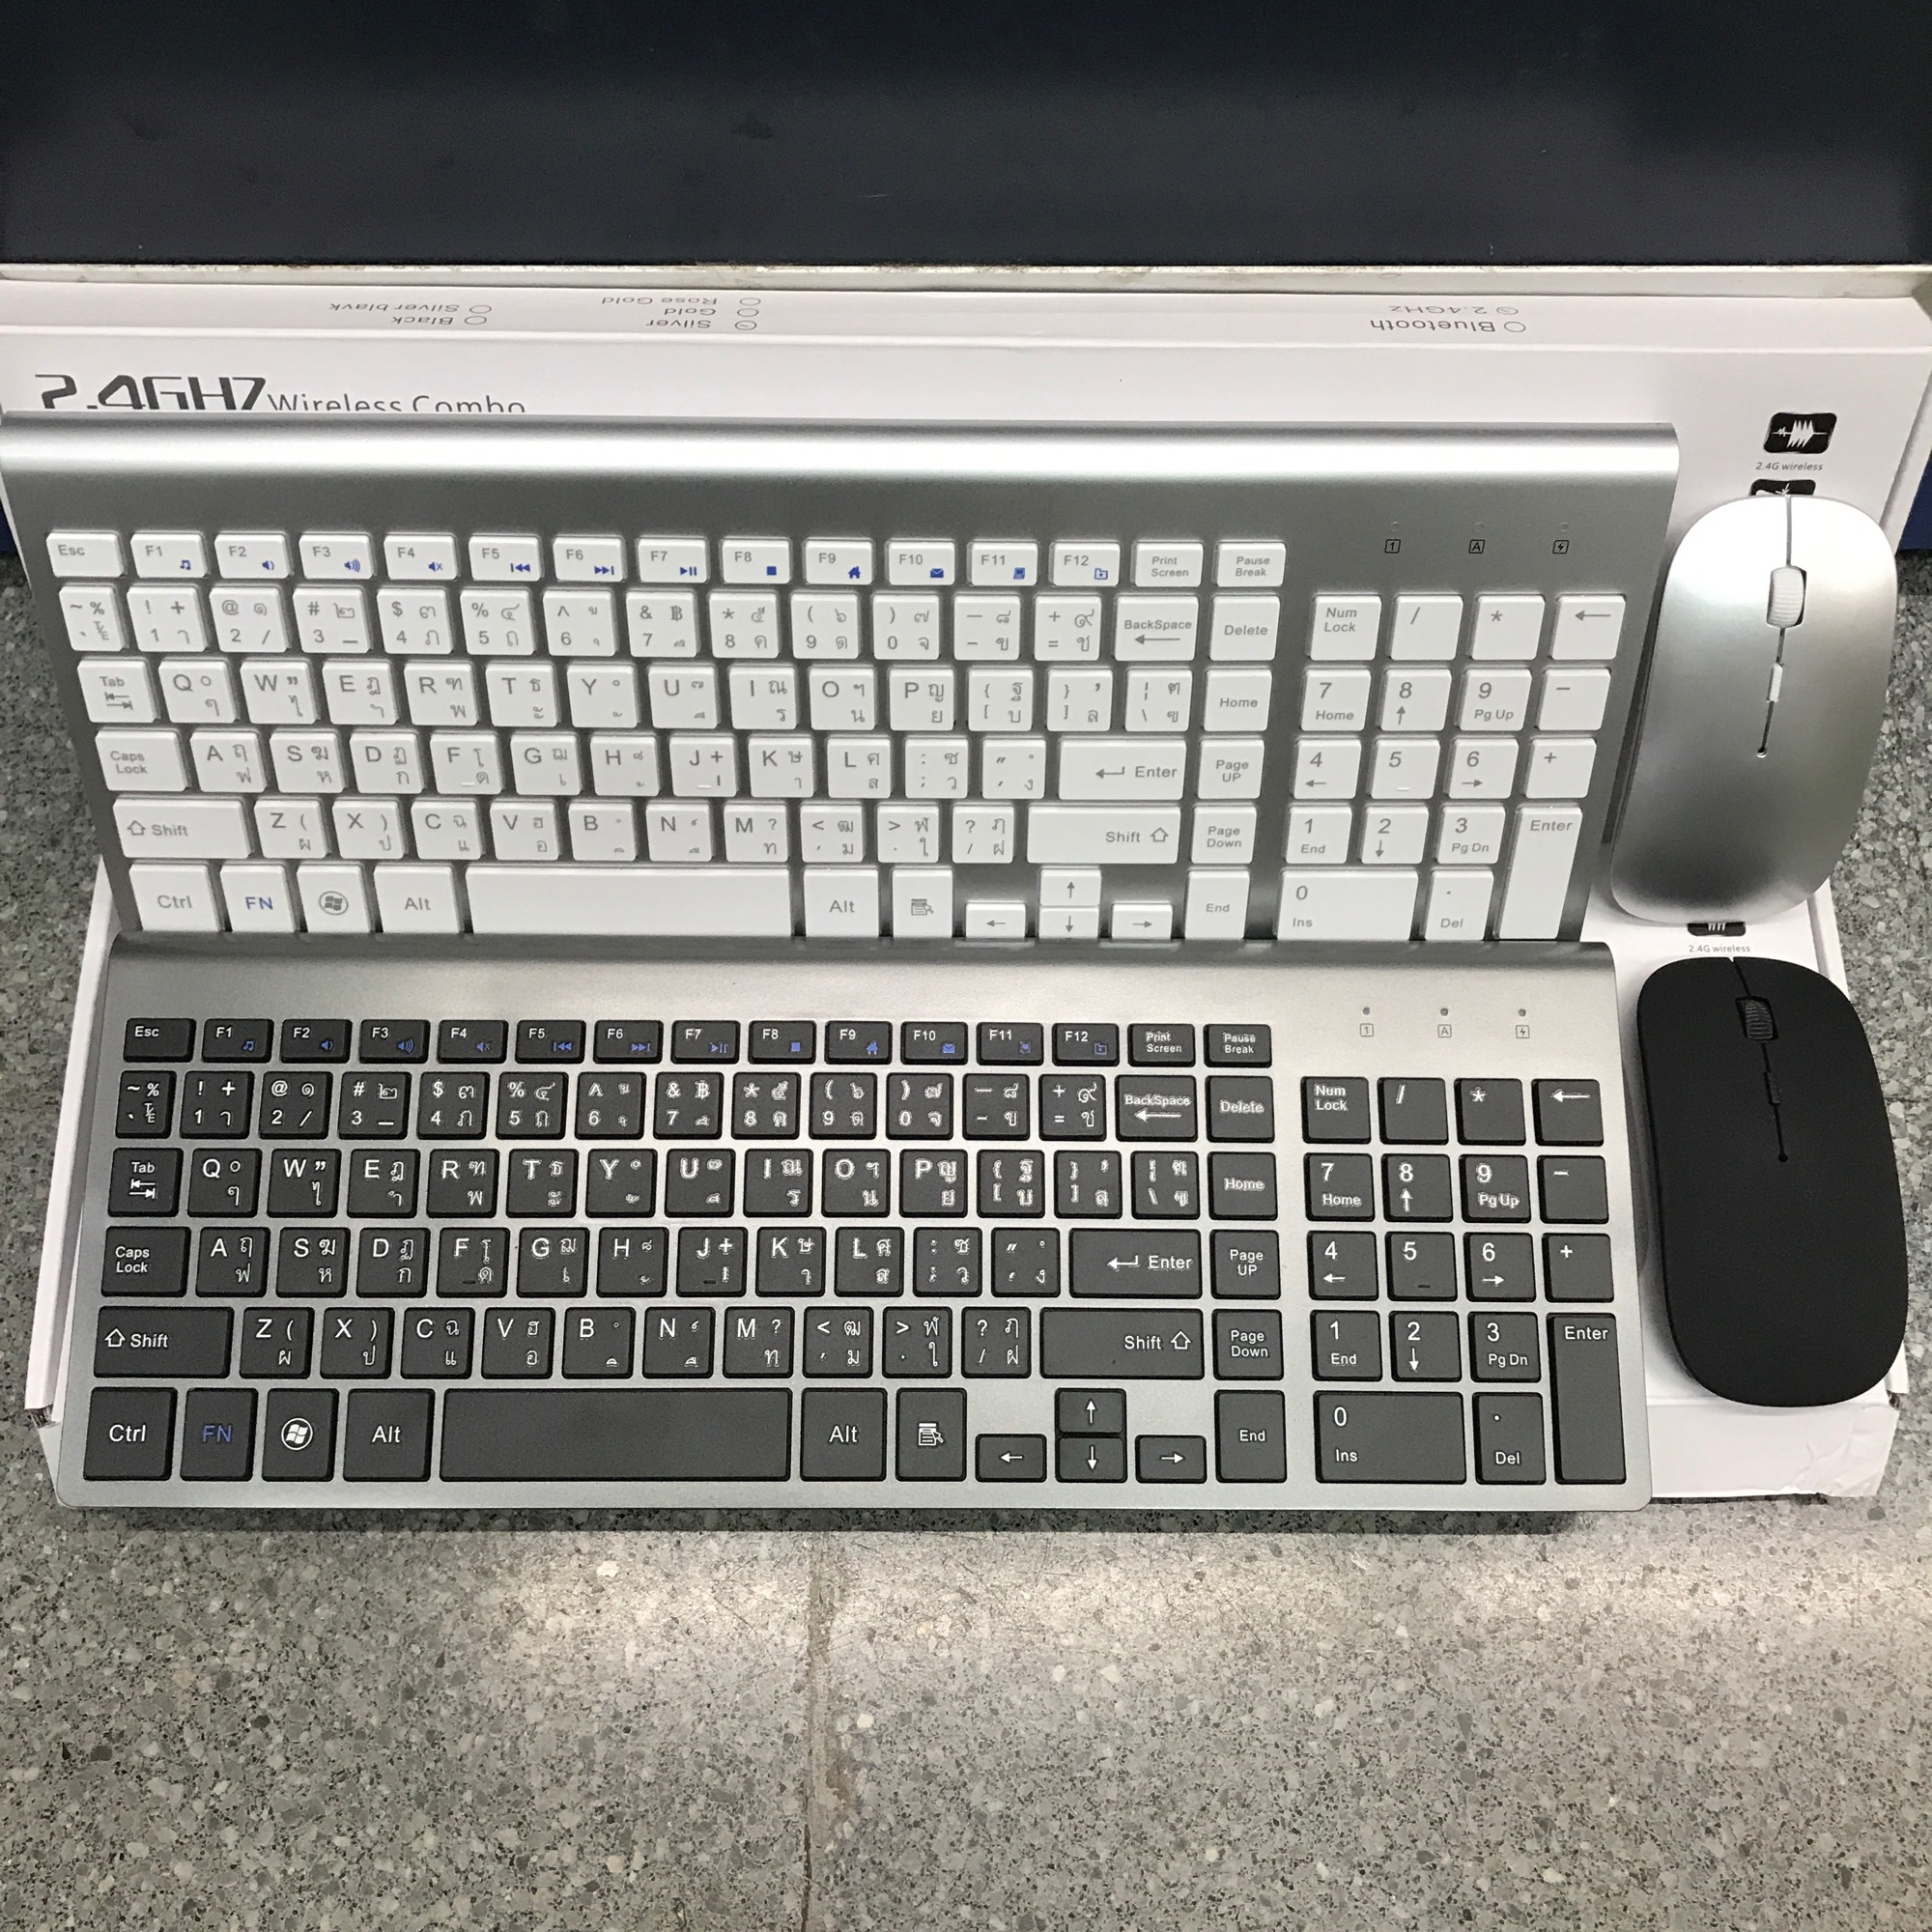 [Wireless Office Keyboard] ชุดเมาส์ คีย์บอร์ด ไร้สาย (สีขาว/ สีดํา) แป้นพิมพ์ไทยอังกฤษ Wireless  EN/TH English and Thai Layout PC keyboard ULTRA THIN 2.4G Wireless USB Combo Keyboard+Mouse for PC Smart TV